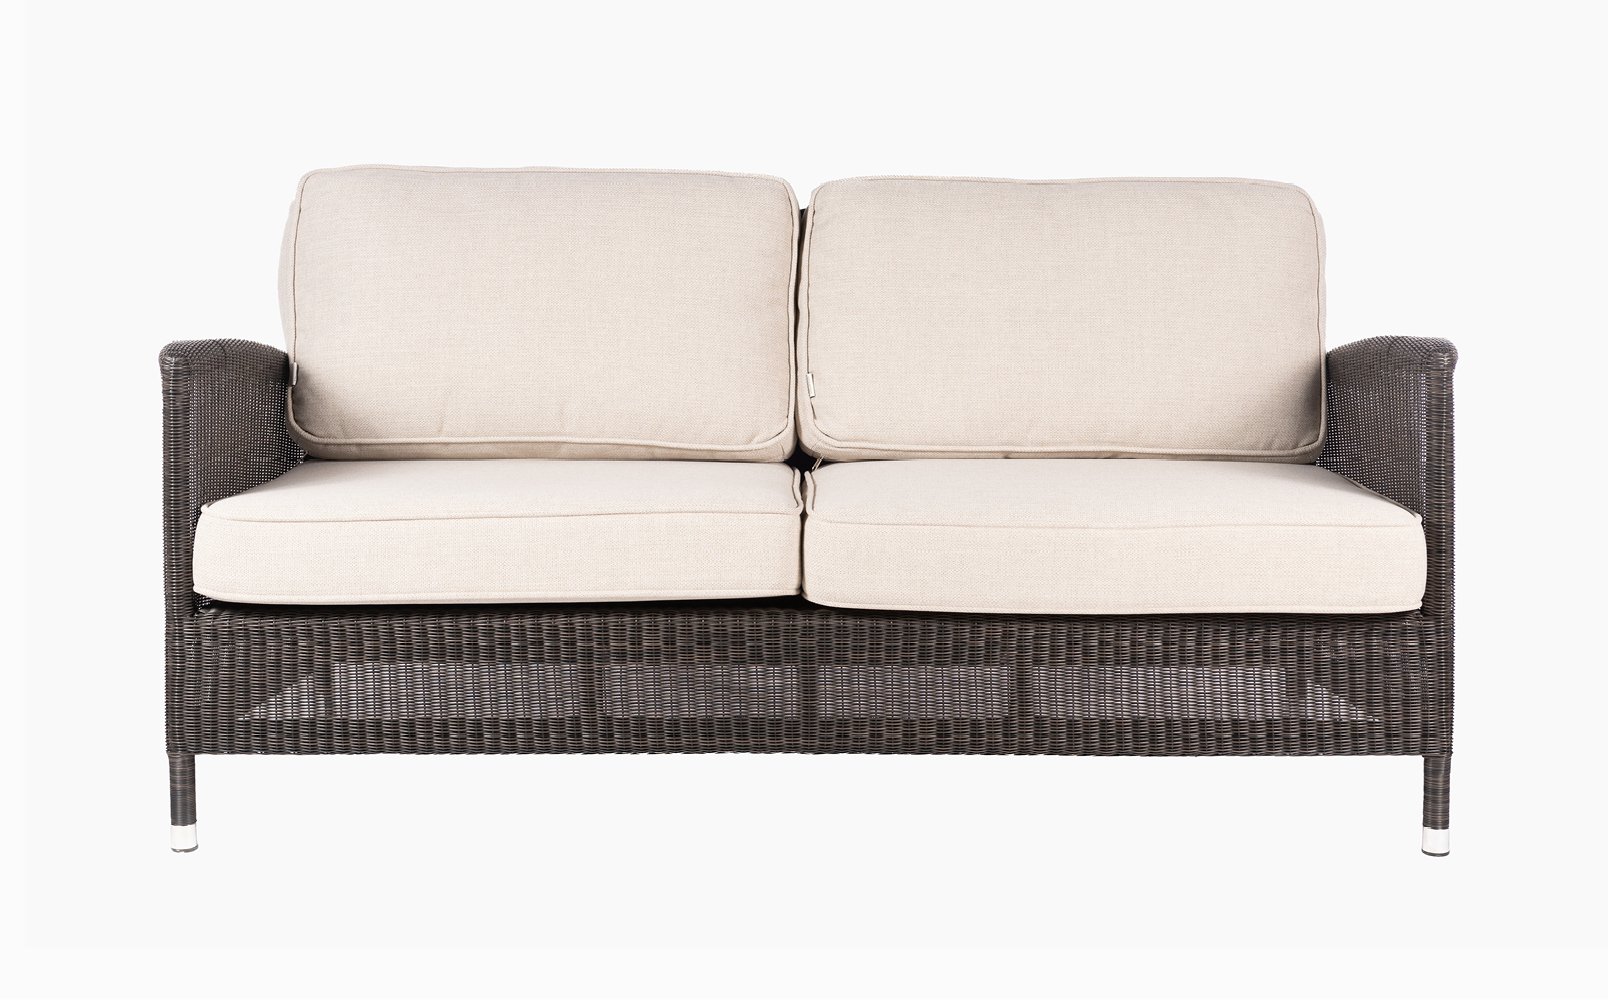 vincent-sheppard-safi-lounge-sofa-2-5S